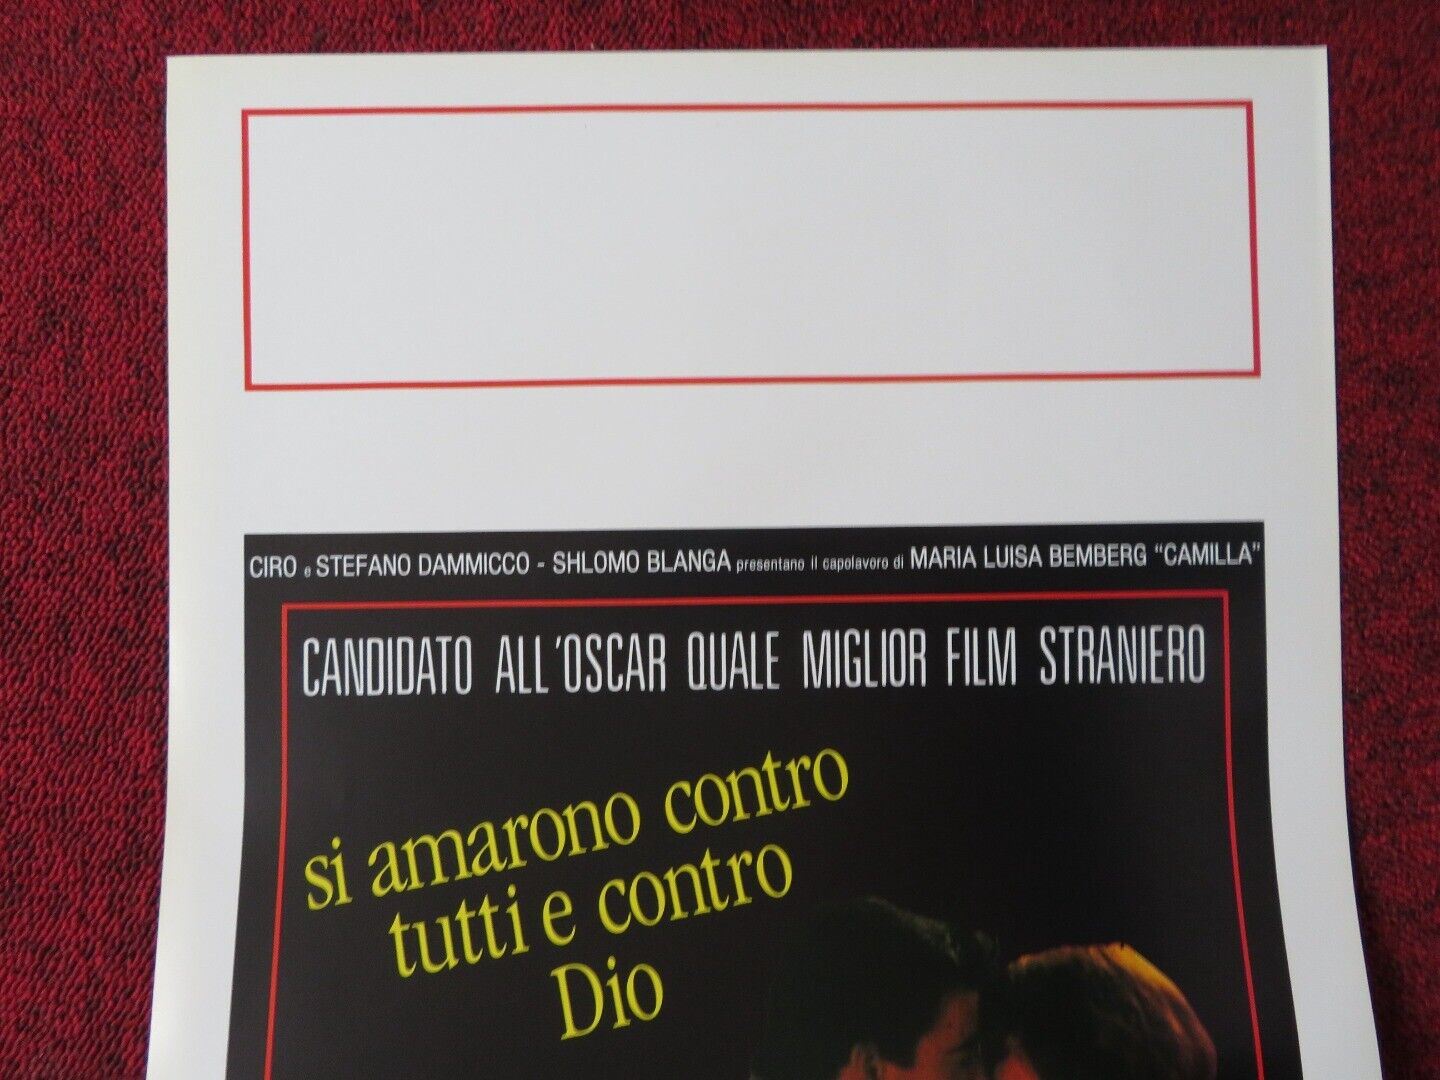 CAMILLA / Camila ITALIAN LOCANDINA (27.5"x13") POSTER SUSU PECORARO 1988